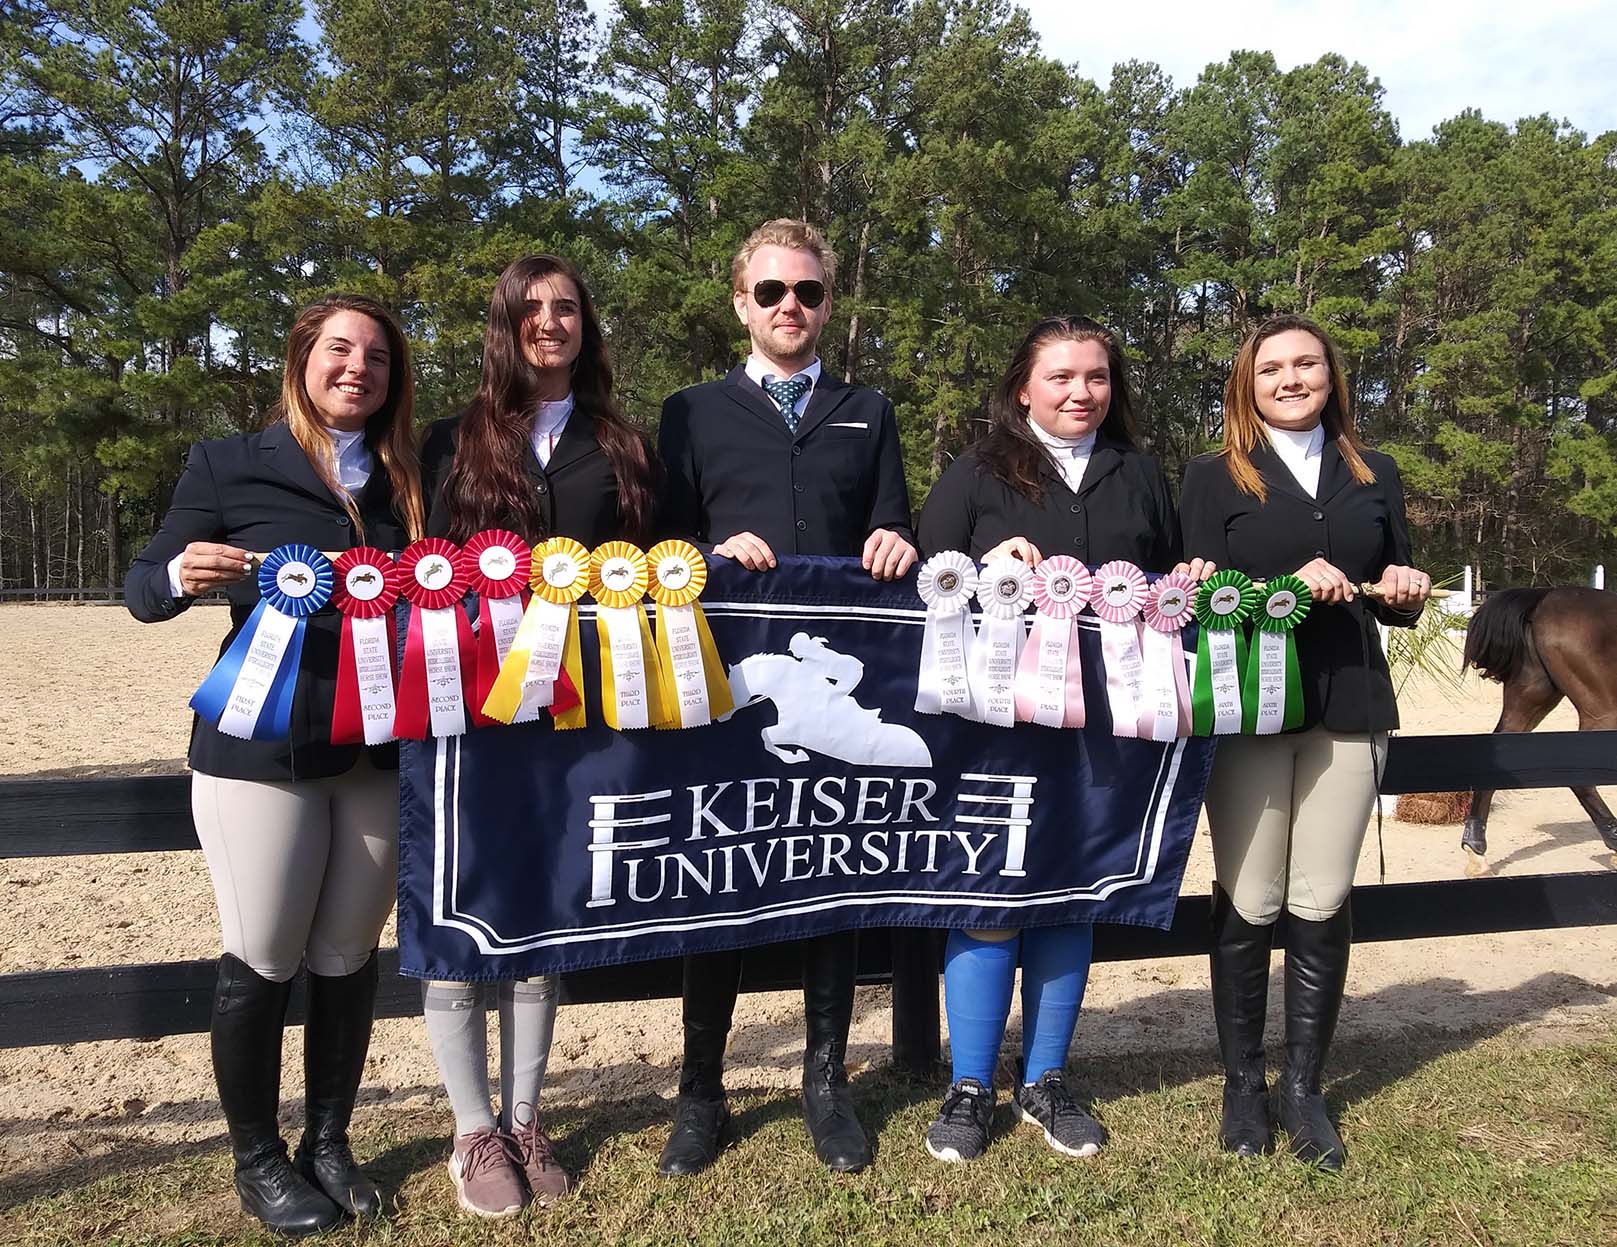 Keiser Equestrian Students Shine at Intercollegiate Horse Show Event